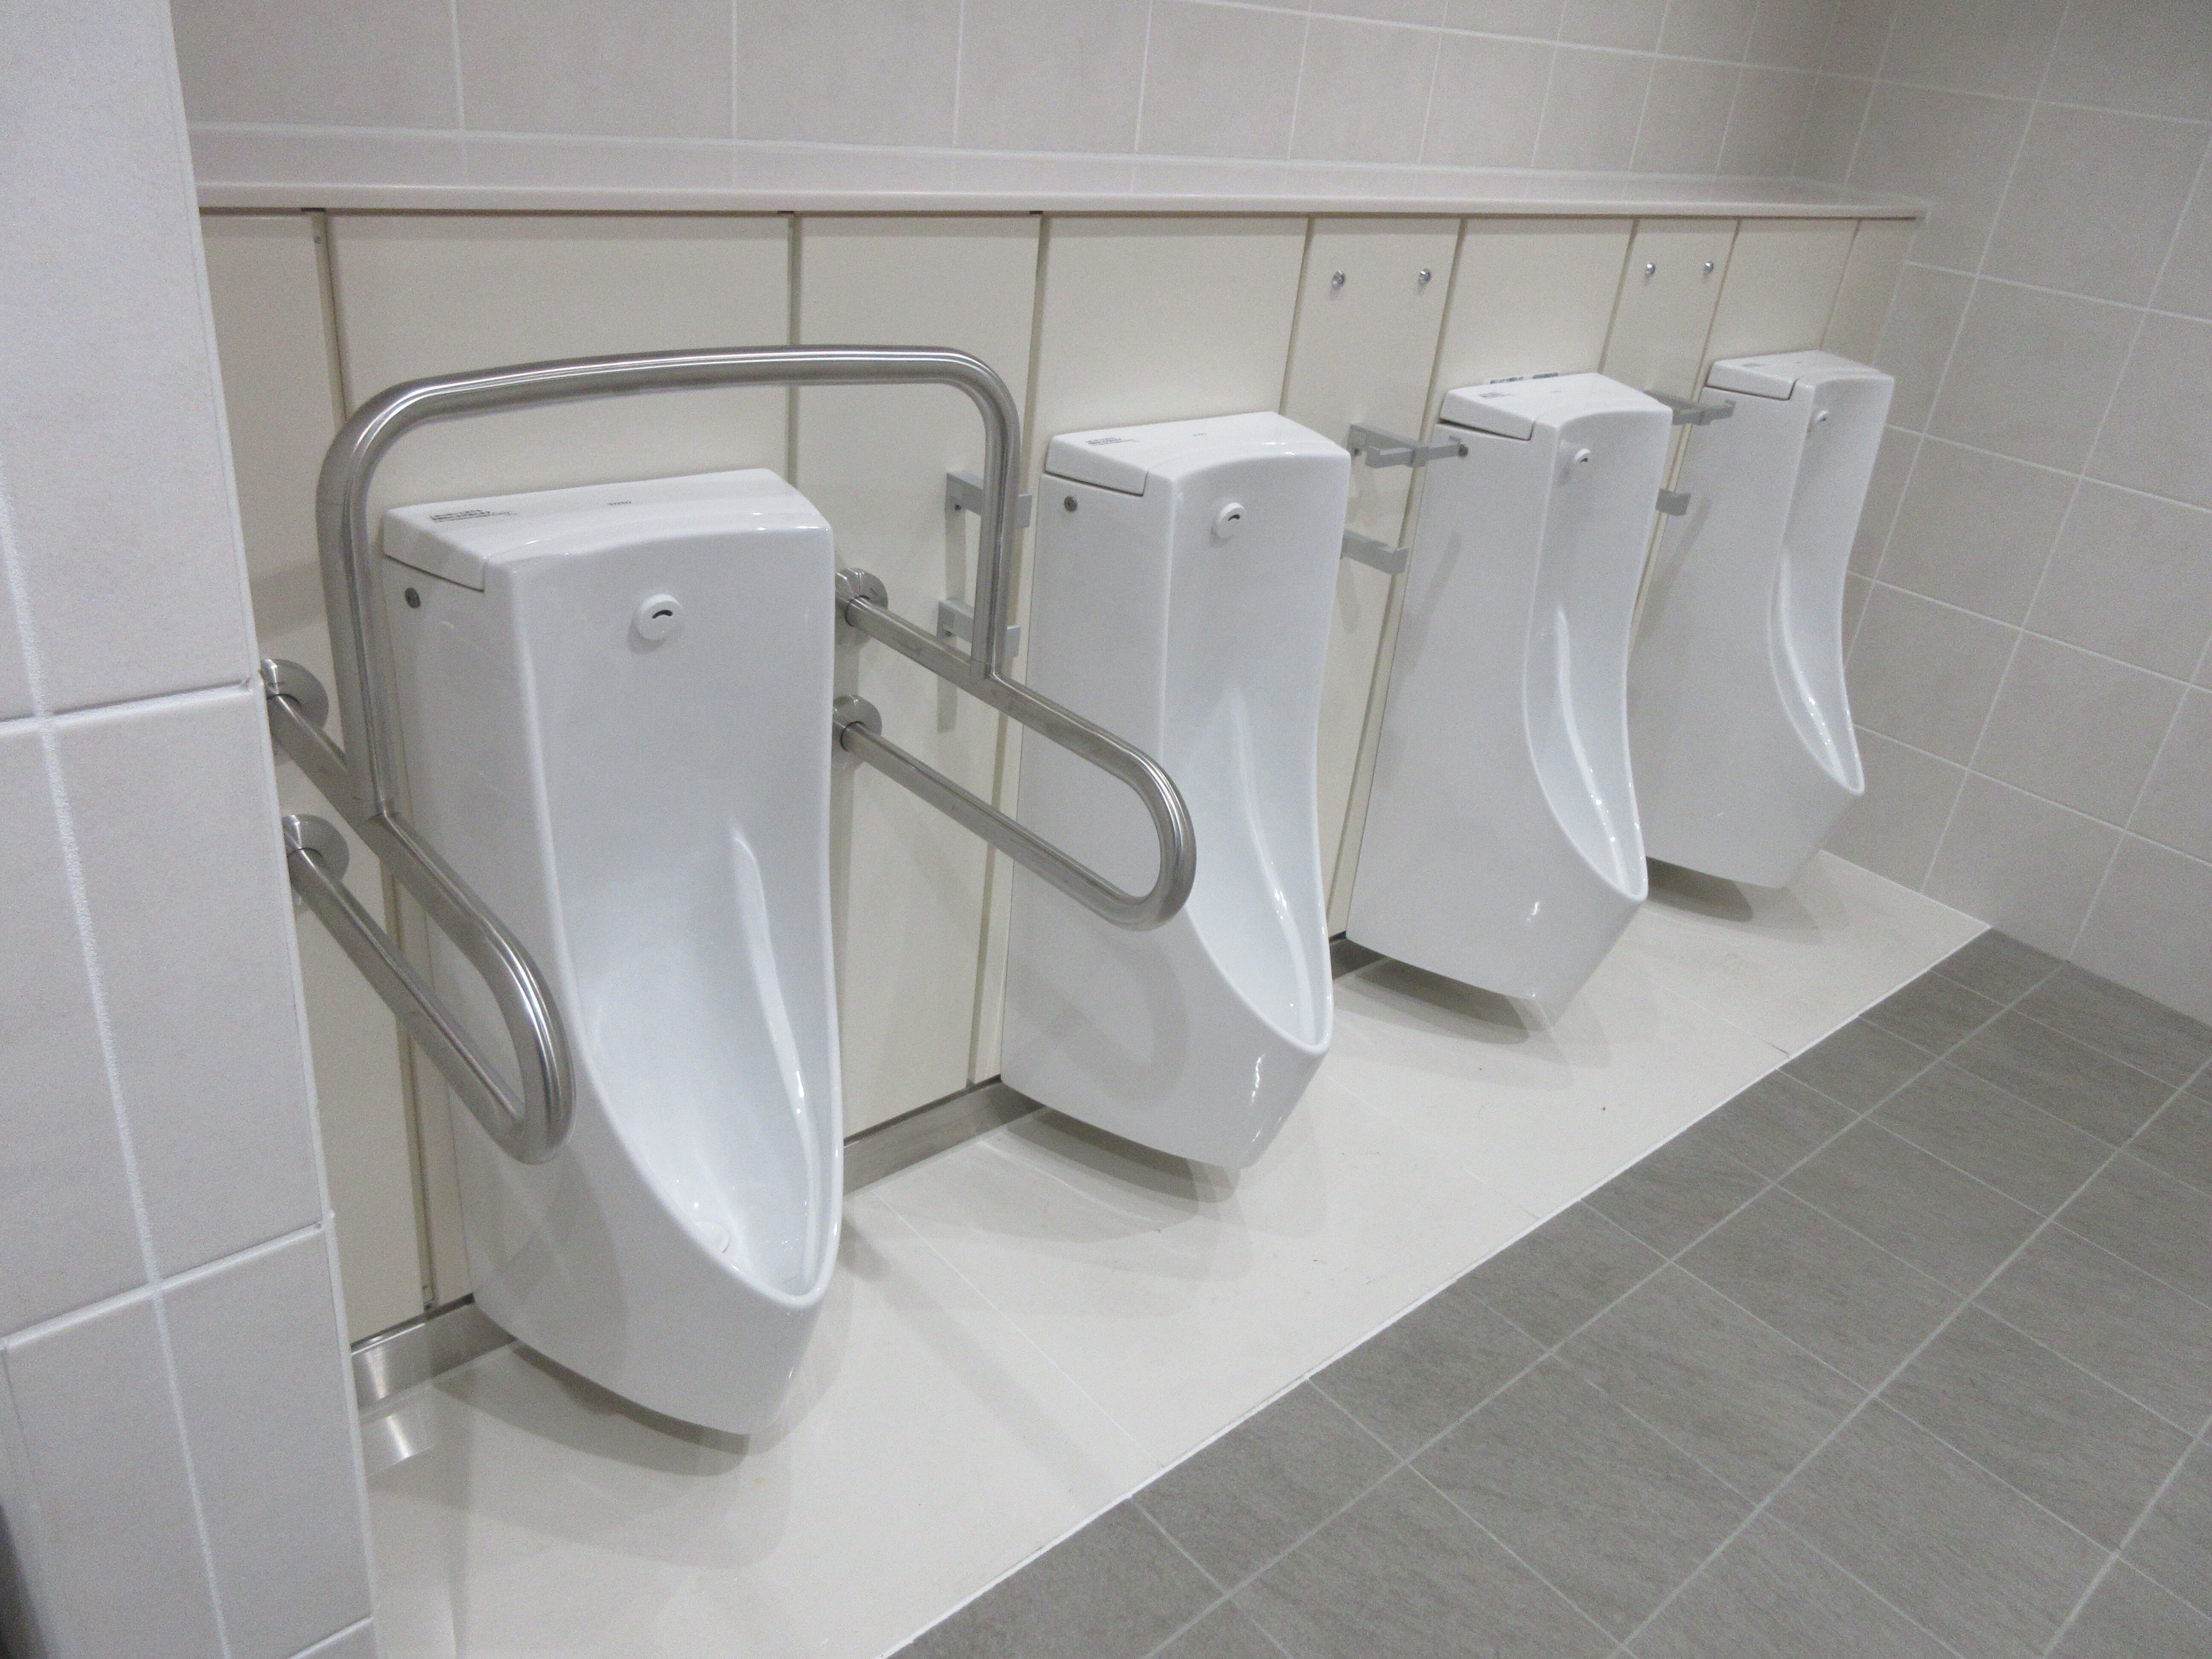 トイレ設備調査日記atosatu 札幌市営地下鉄東豊線福住駅男性用トイレ。